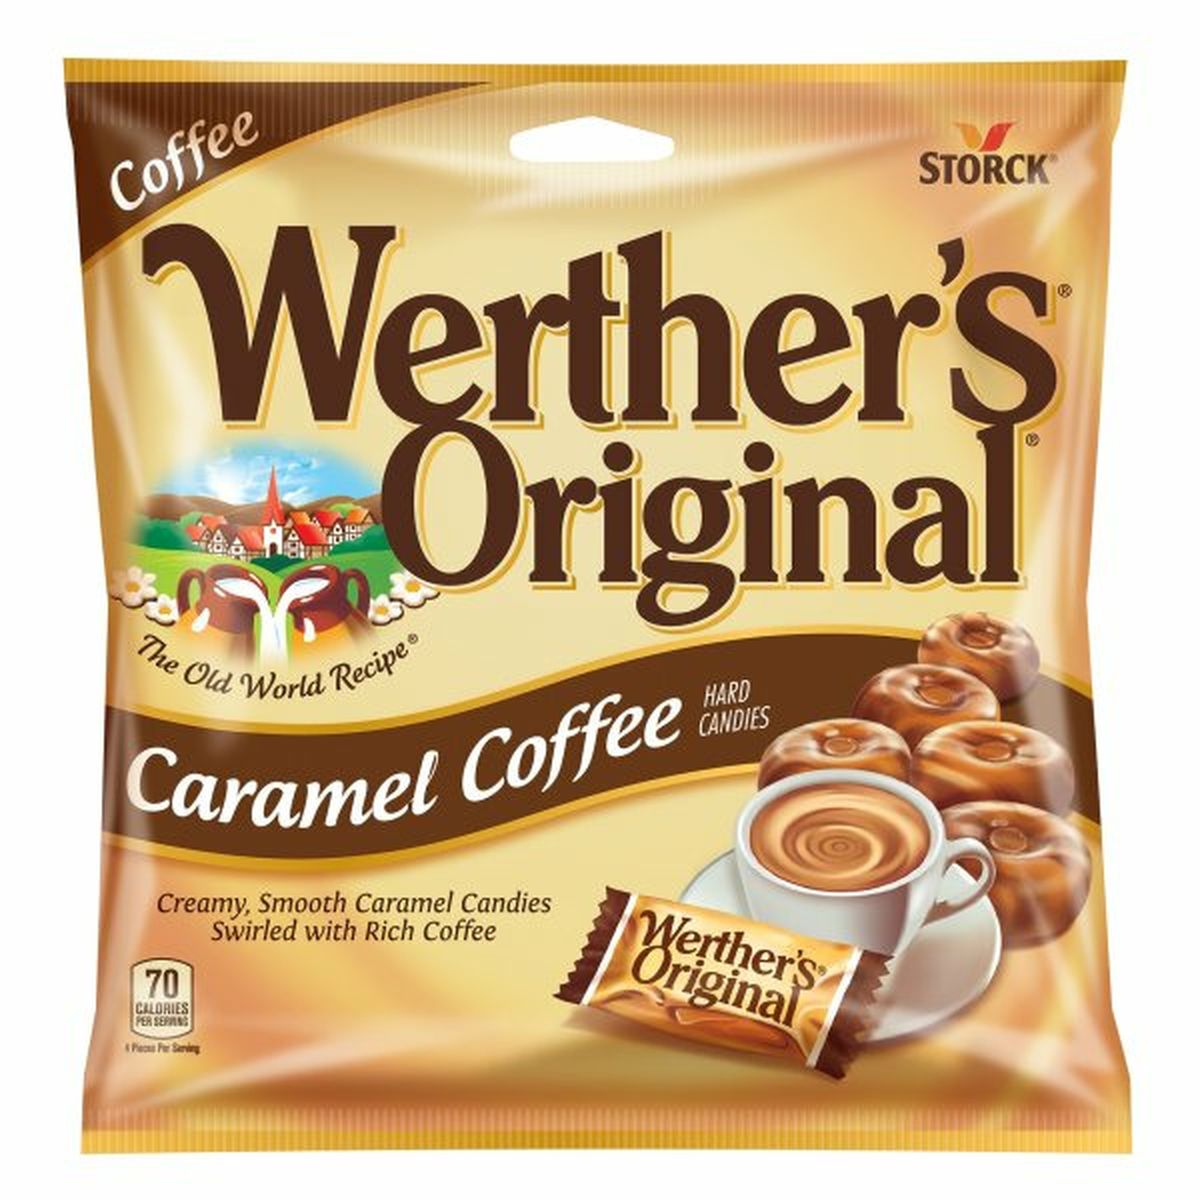 Calories in Werther's Original Original Hard Candies, Caramel Coffee